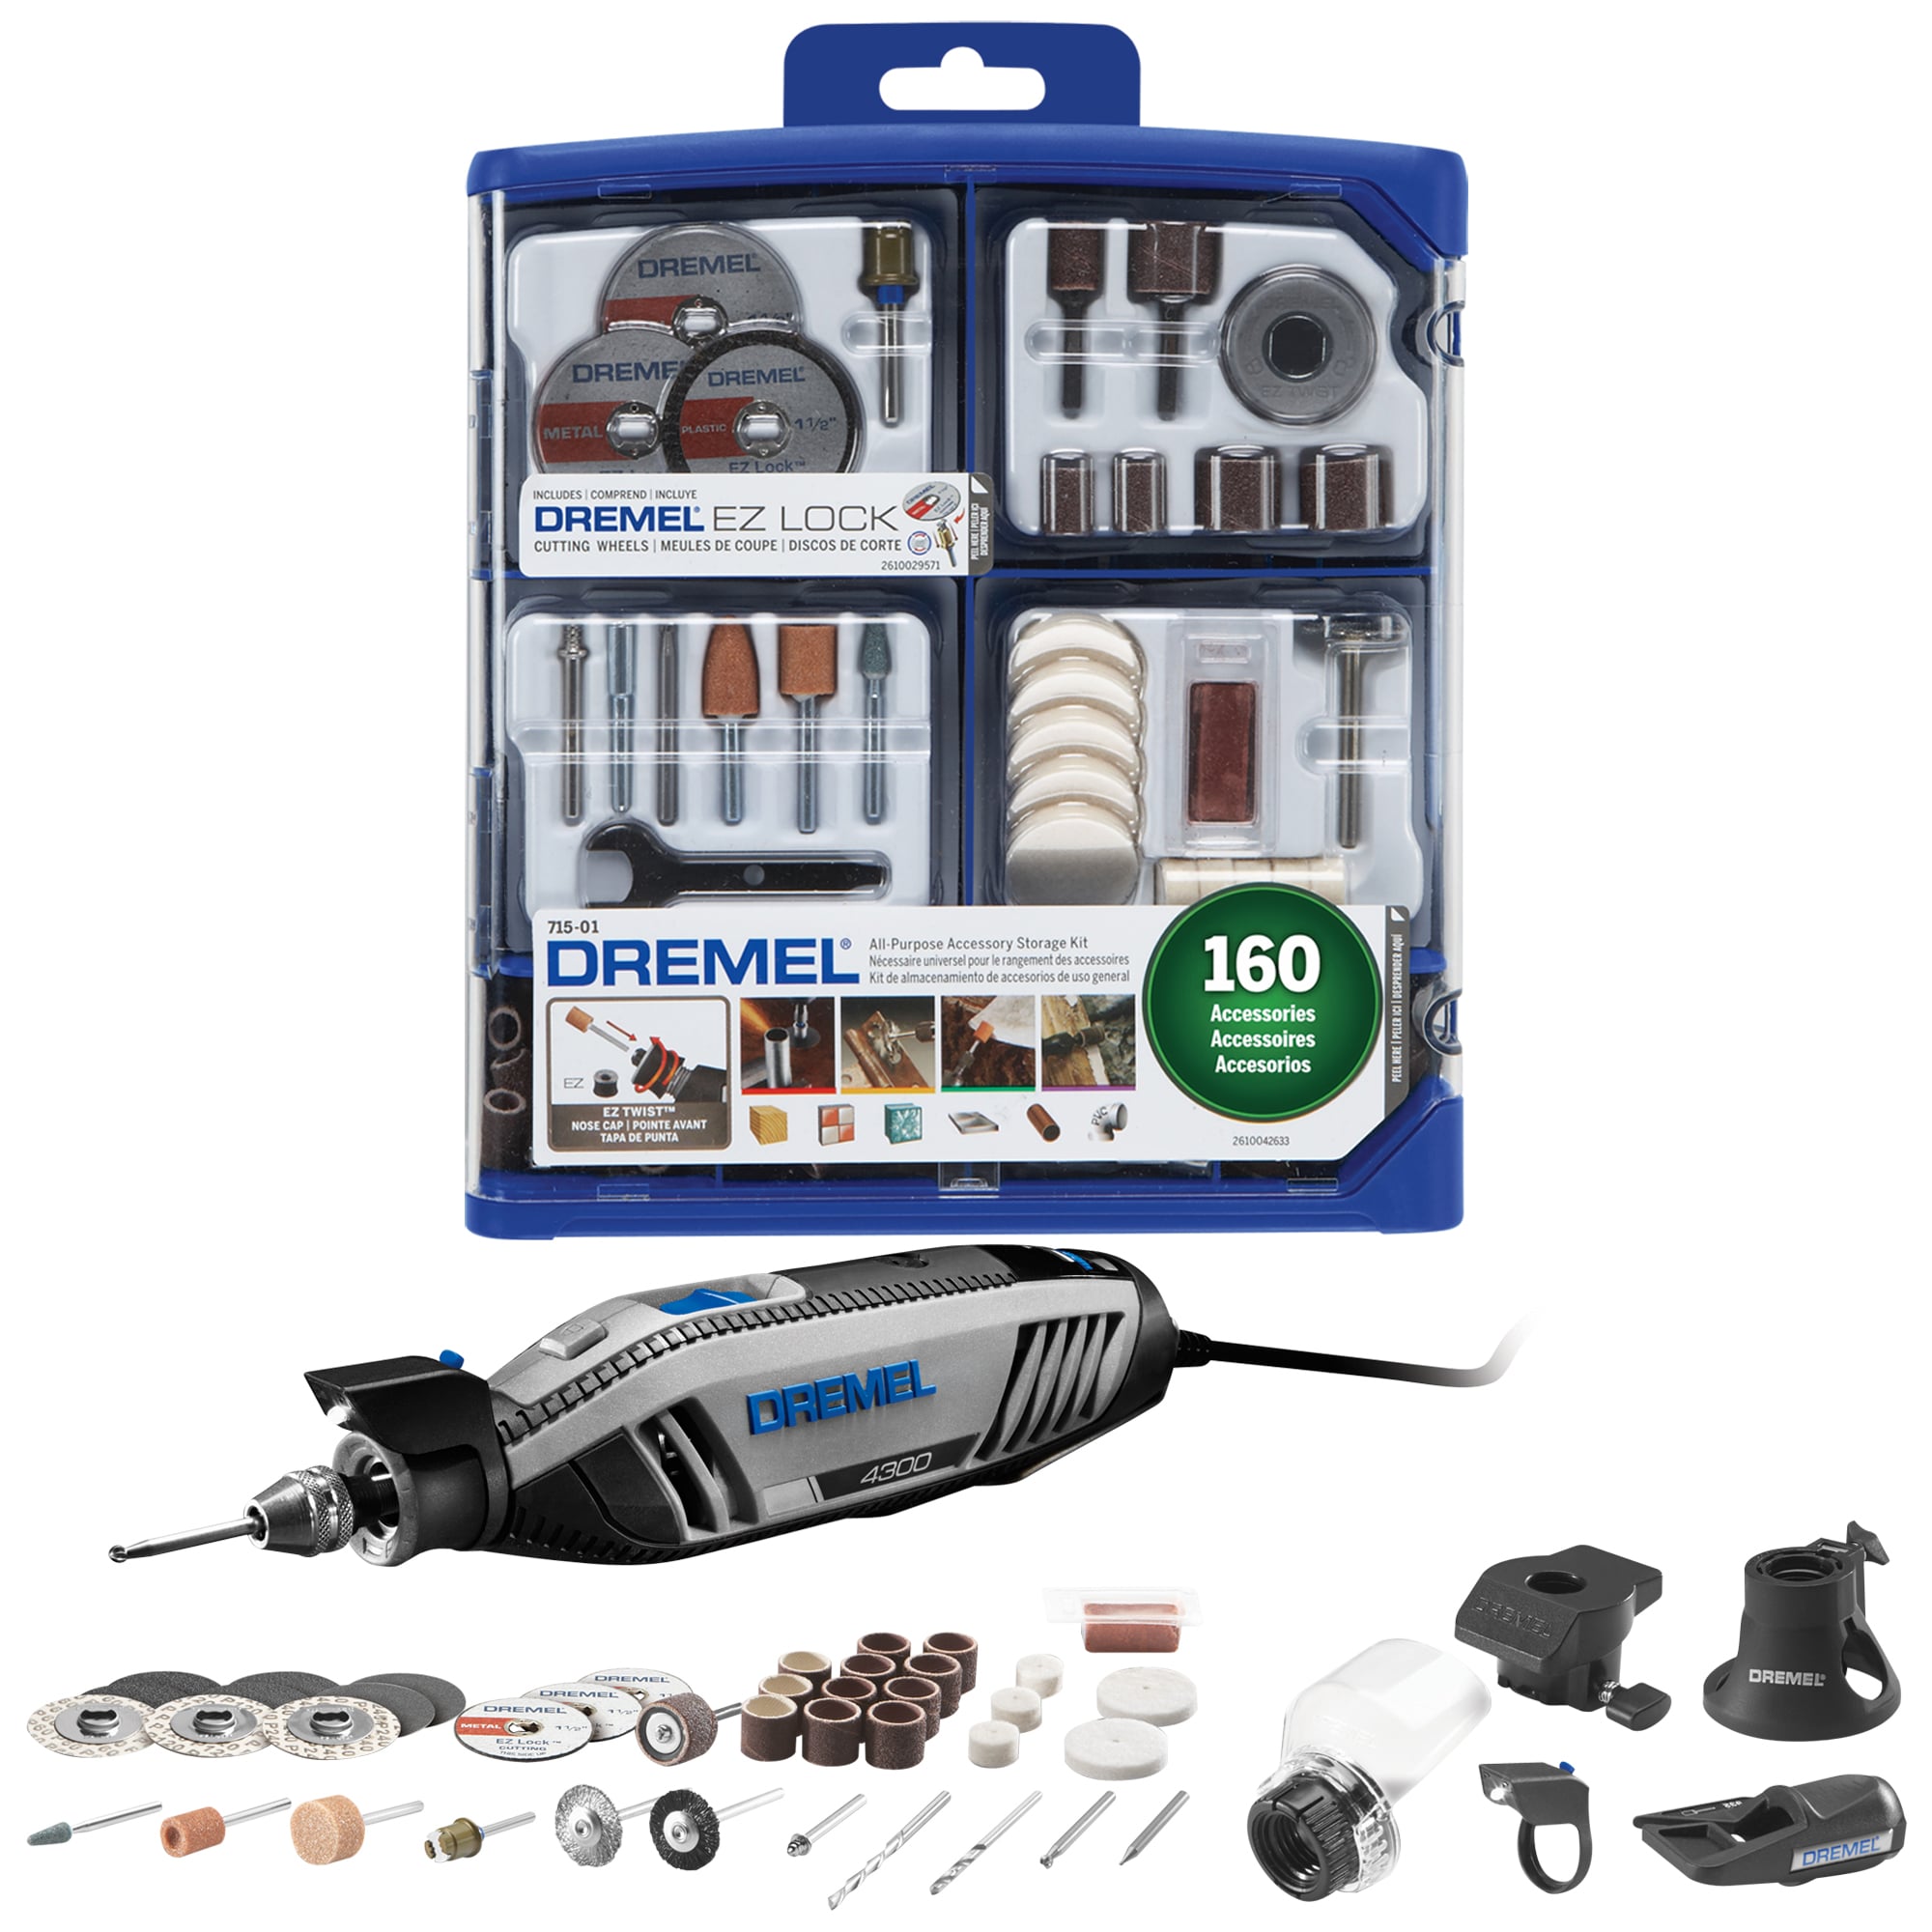 Dremel 4000-2/30 Variable Speed Rotary Tool Kit - Engraver